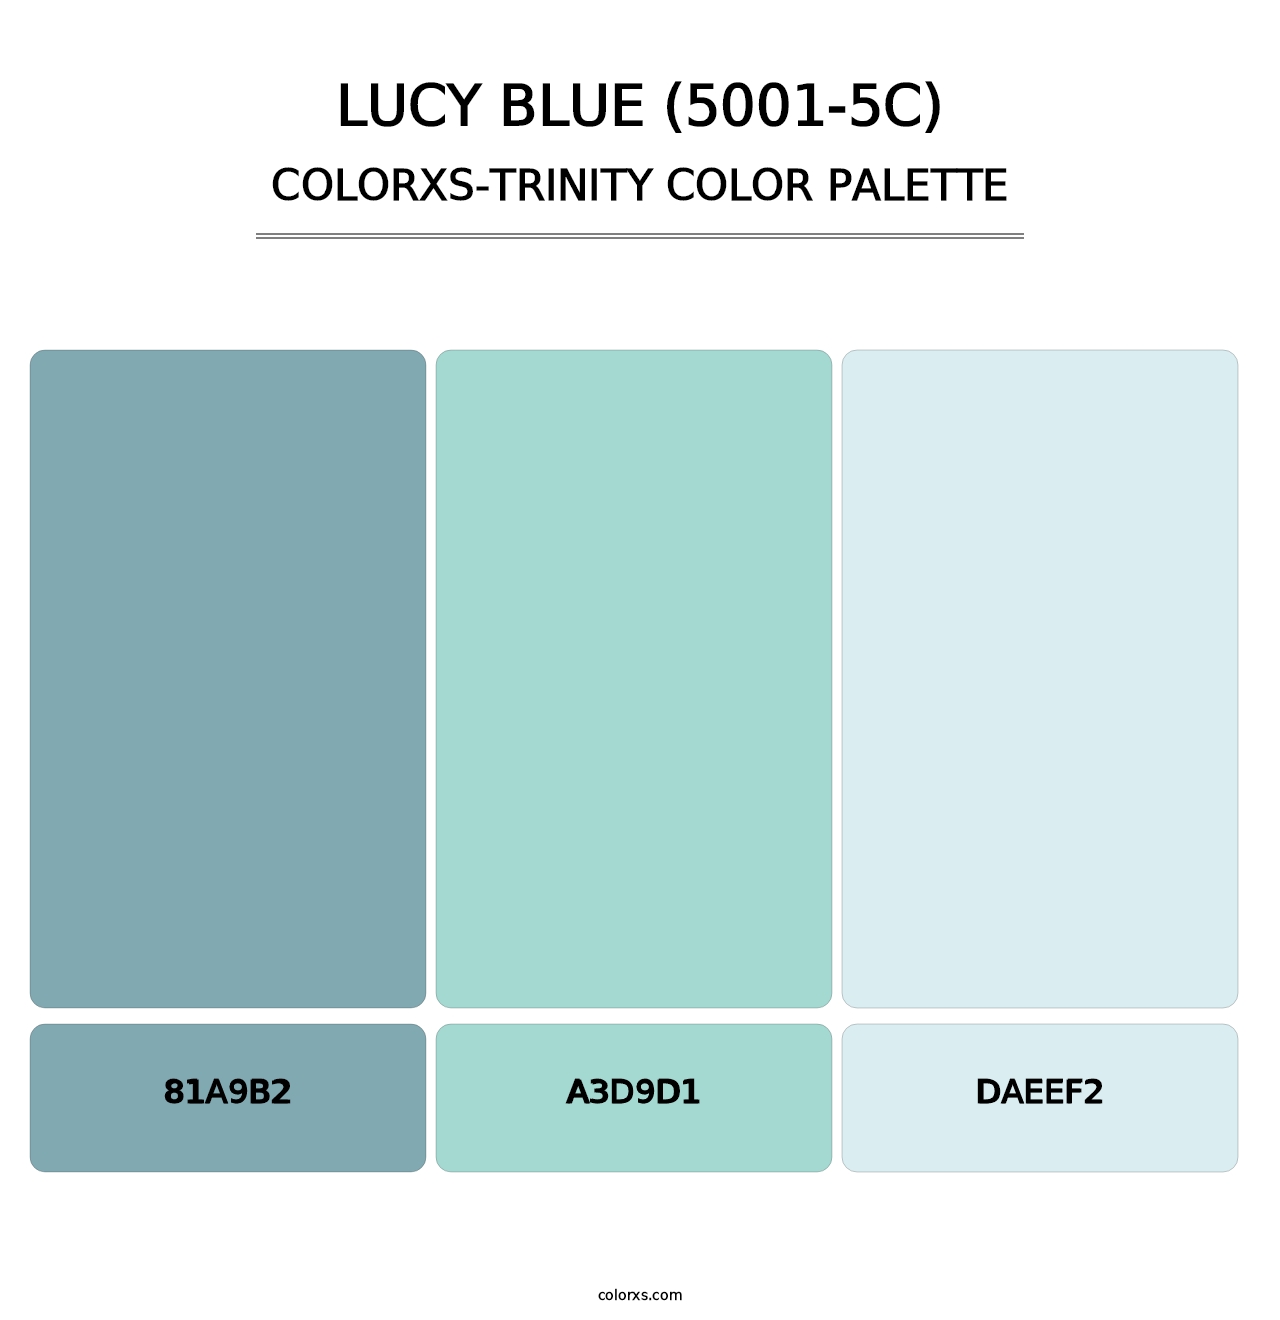 Lucy Blue (5001-5C) - Colorxs Trinity Palette